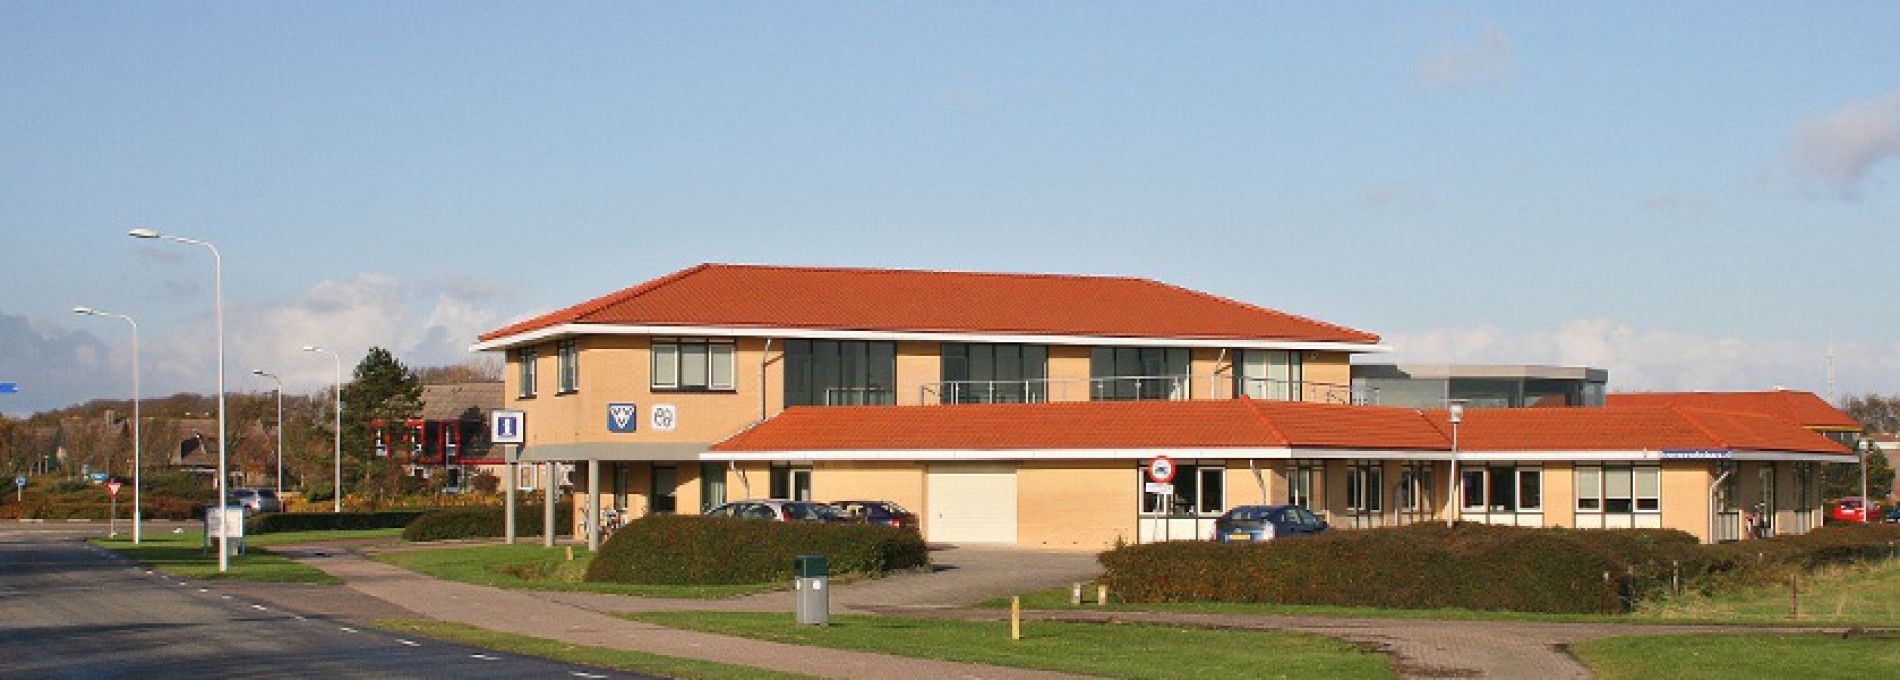 Tourist Office Nes Ameland